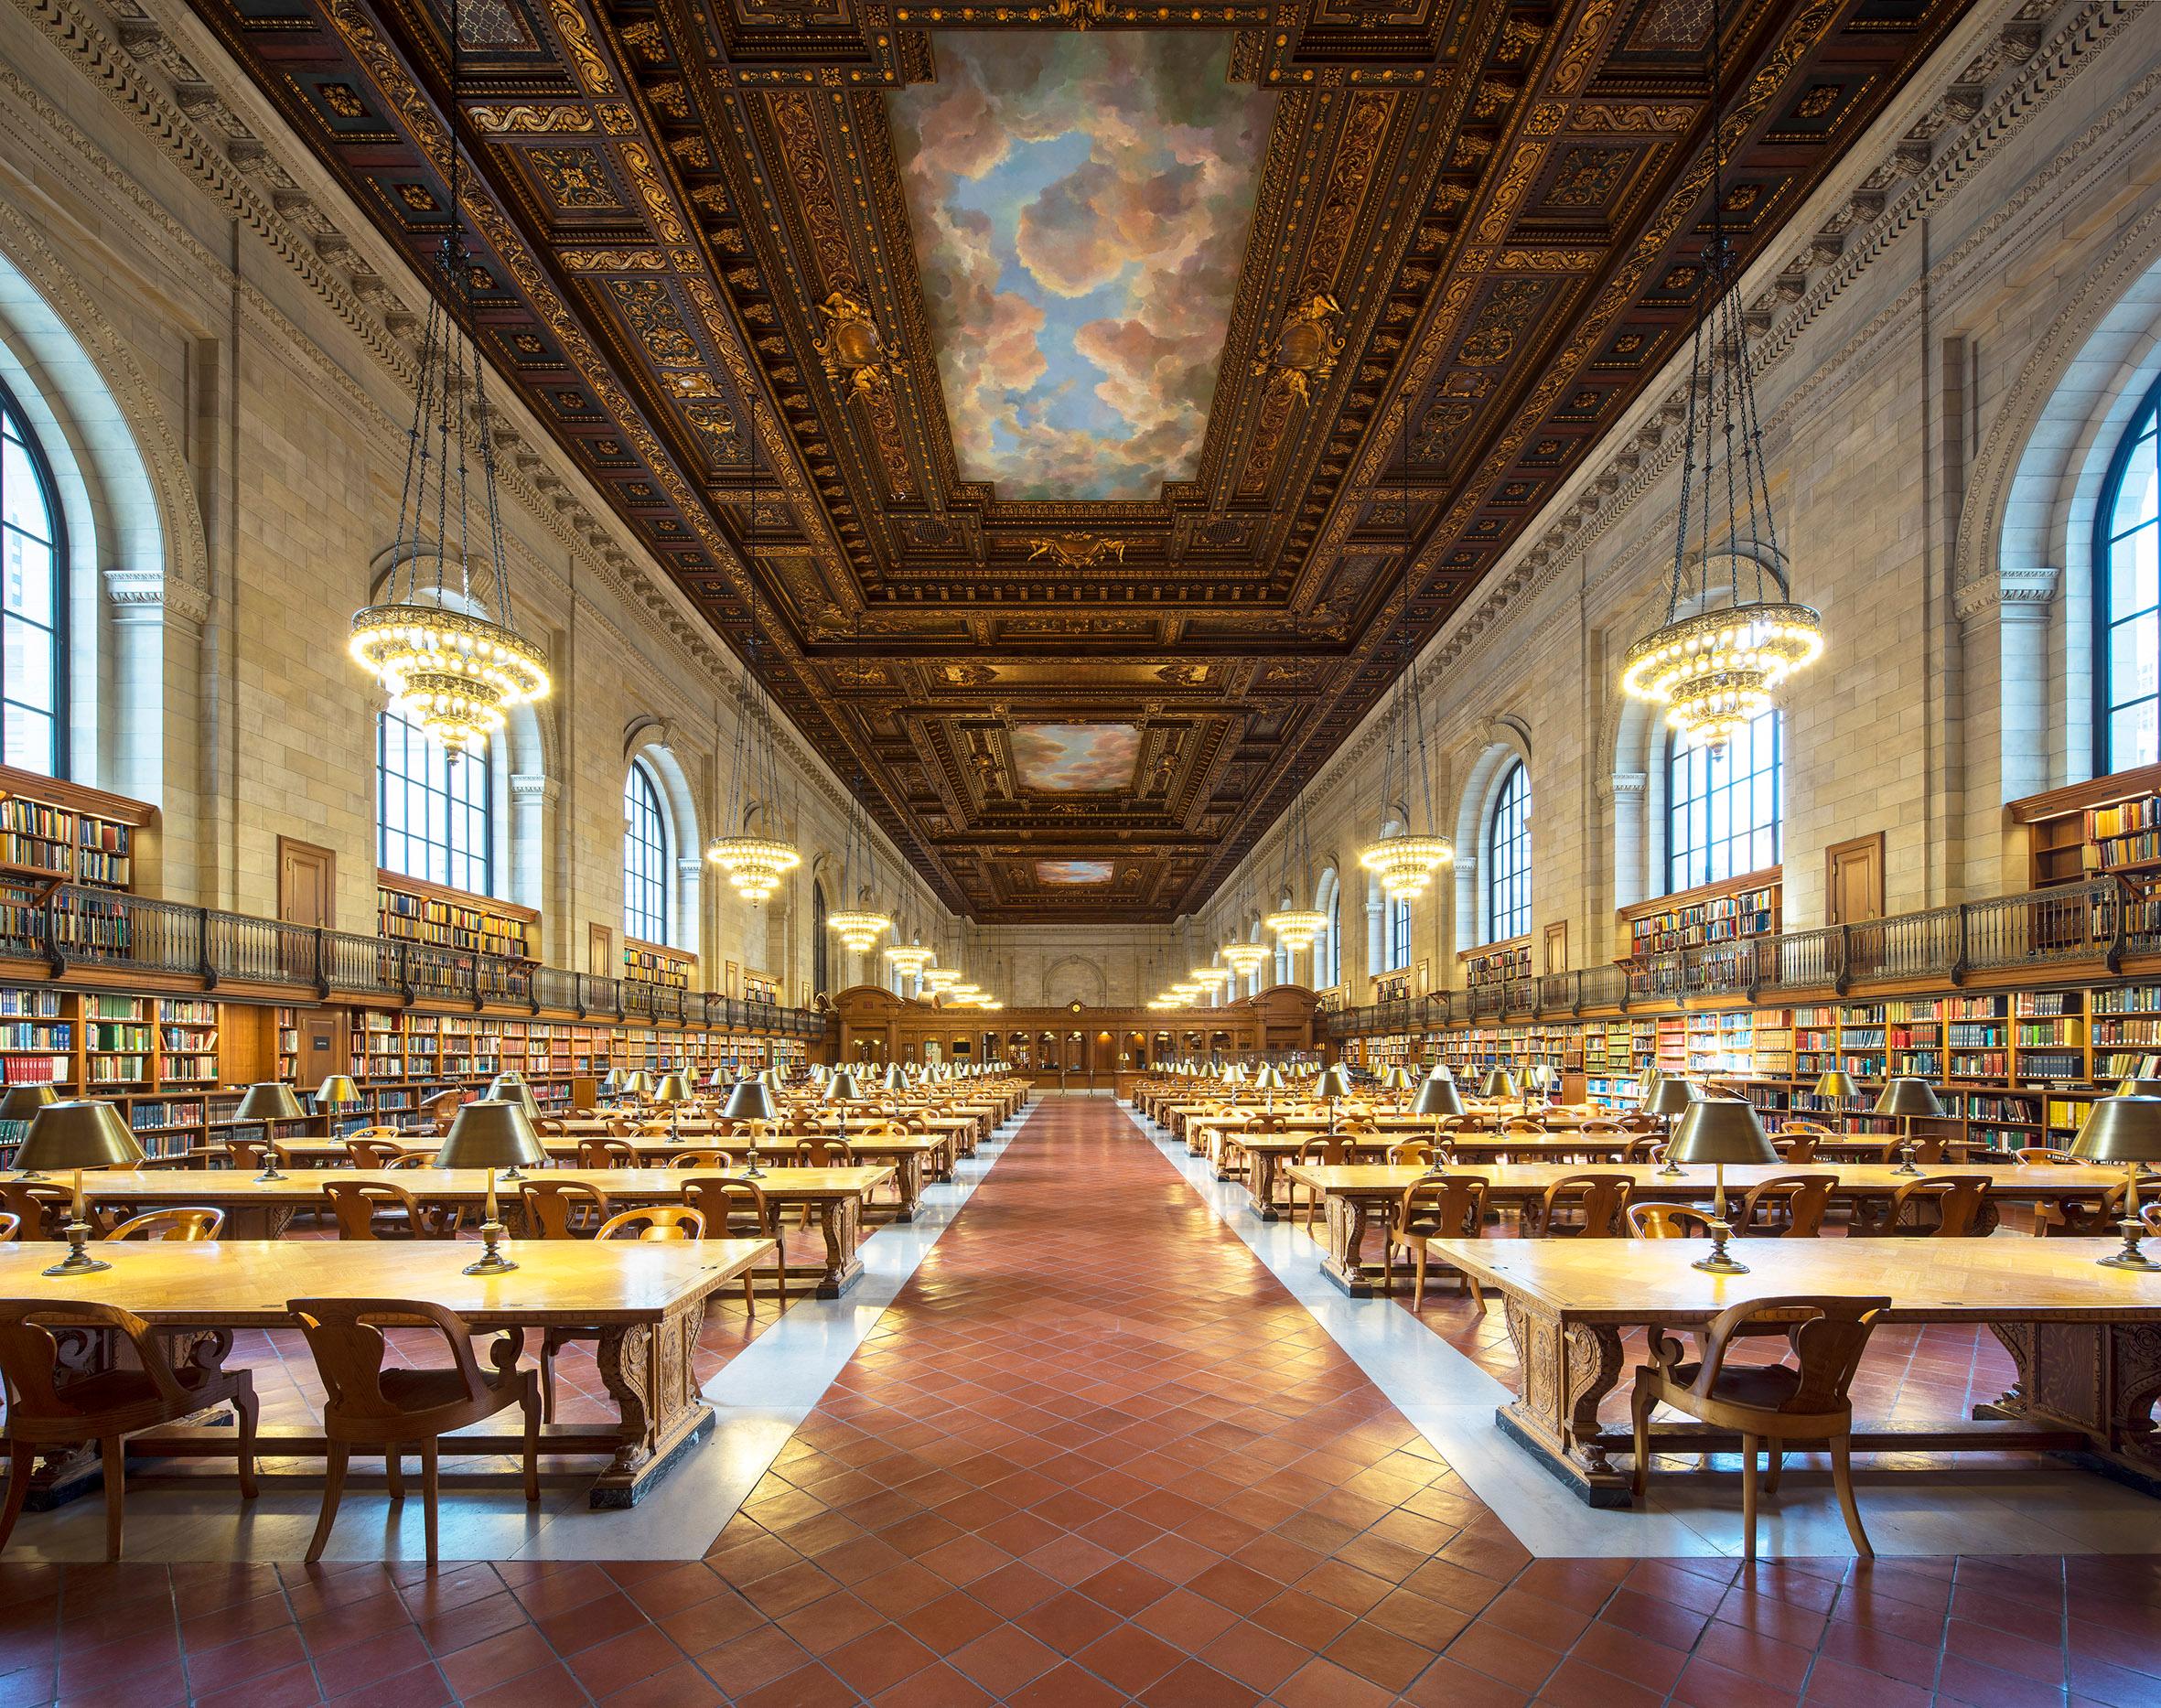 "Rose main reading room, New York Public Library"